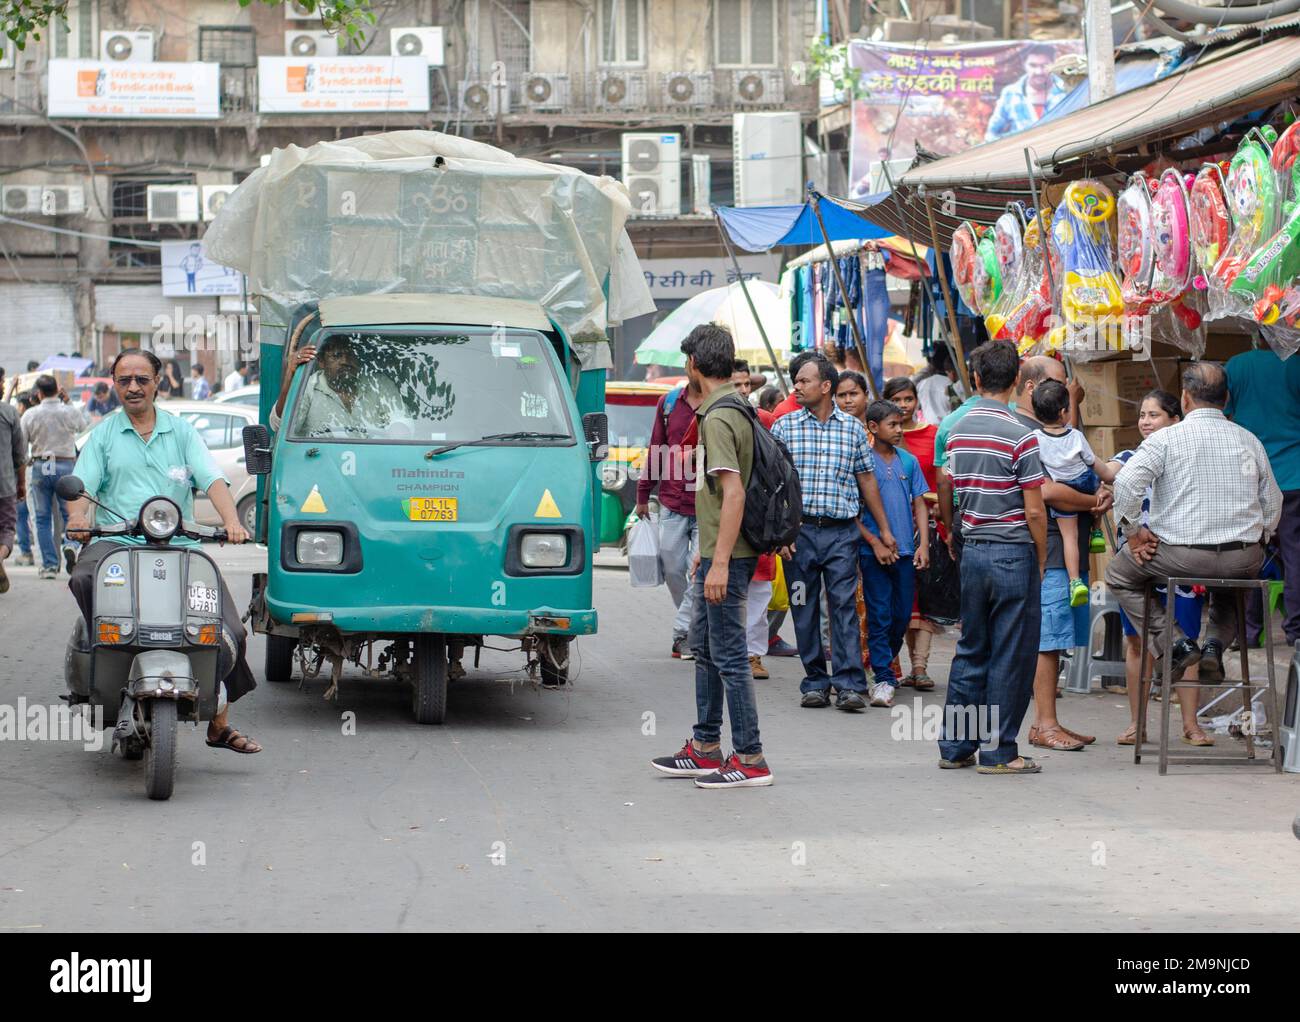 Indian people walking at the bazaar outdoor. Street market downtown Stock Photo